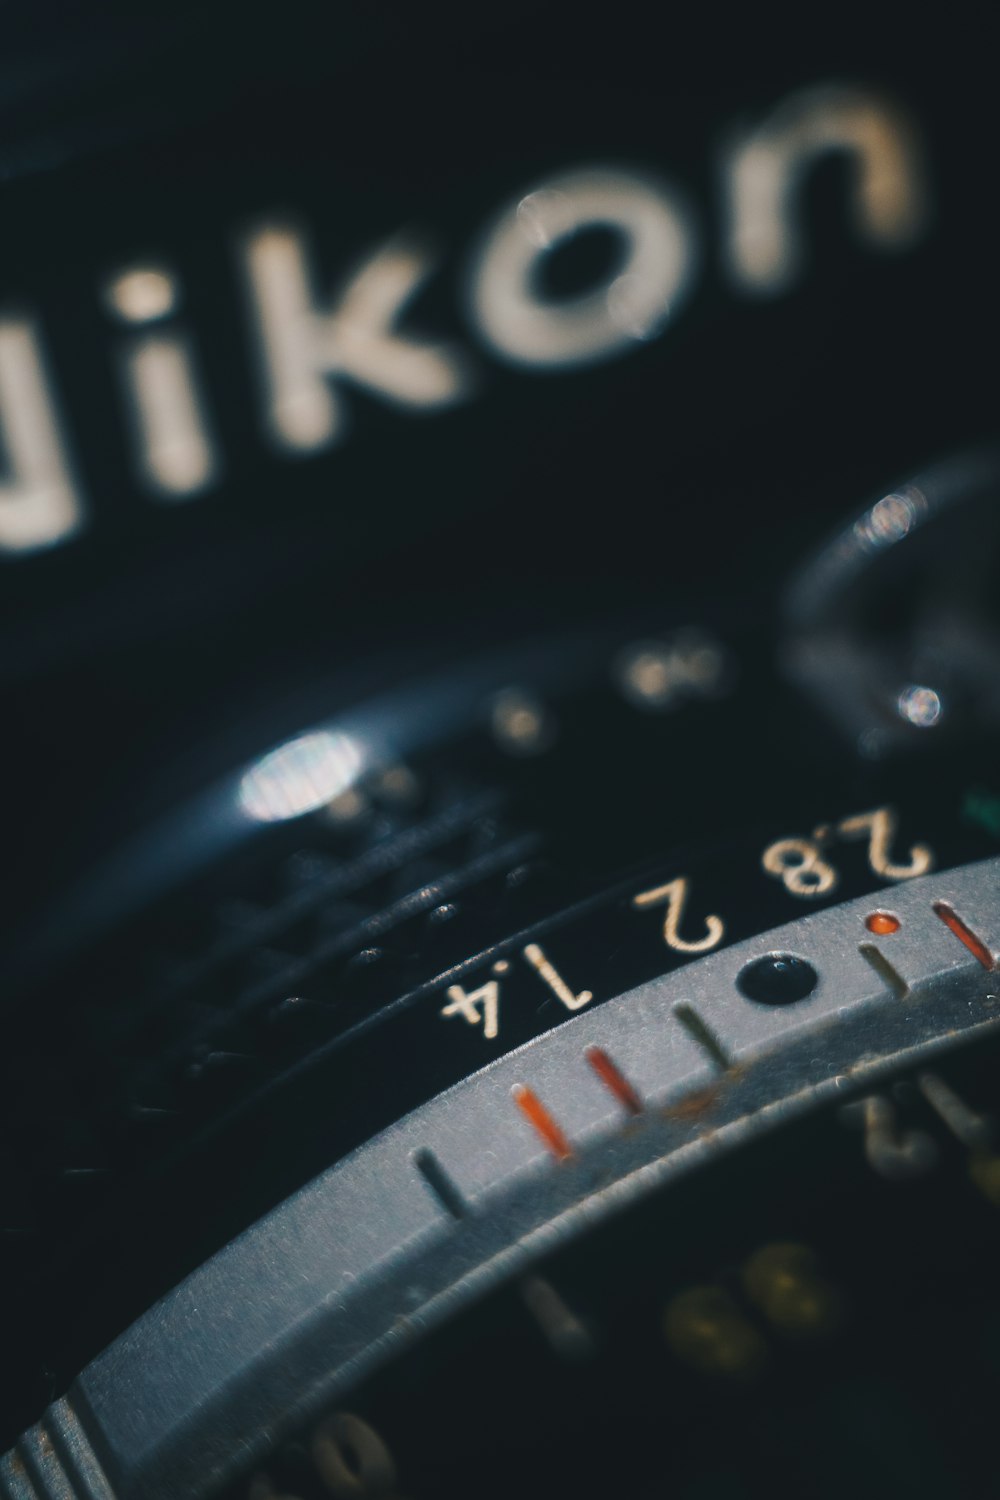 close view of black Nikon camera